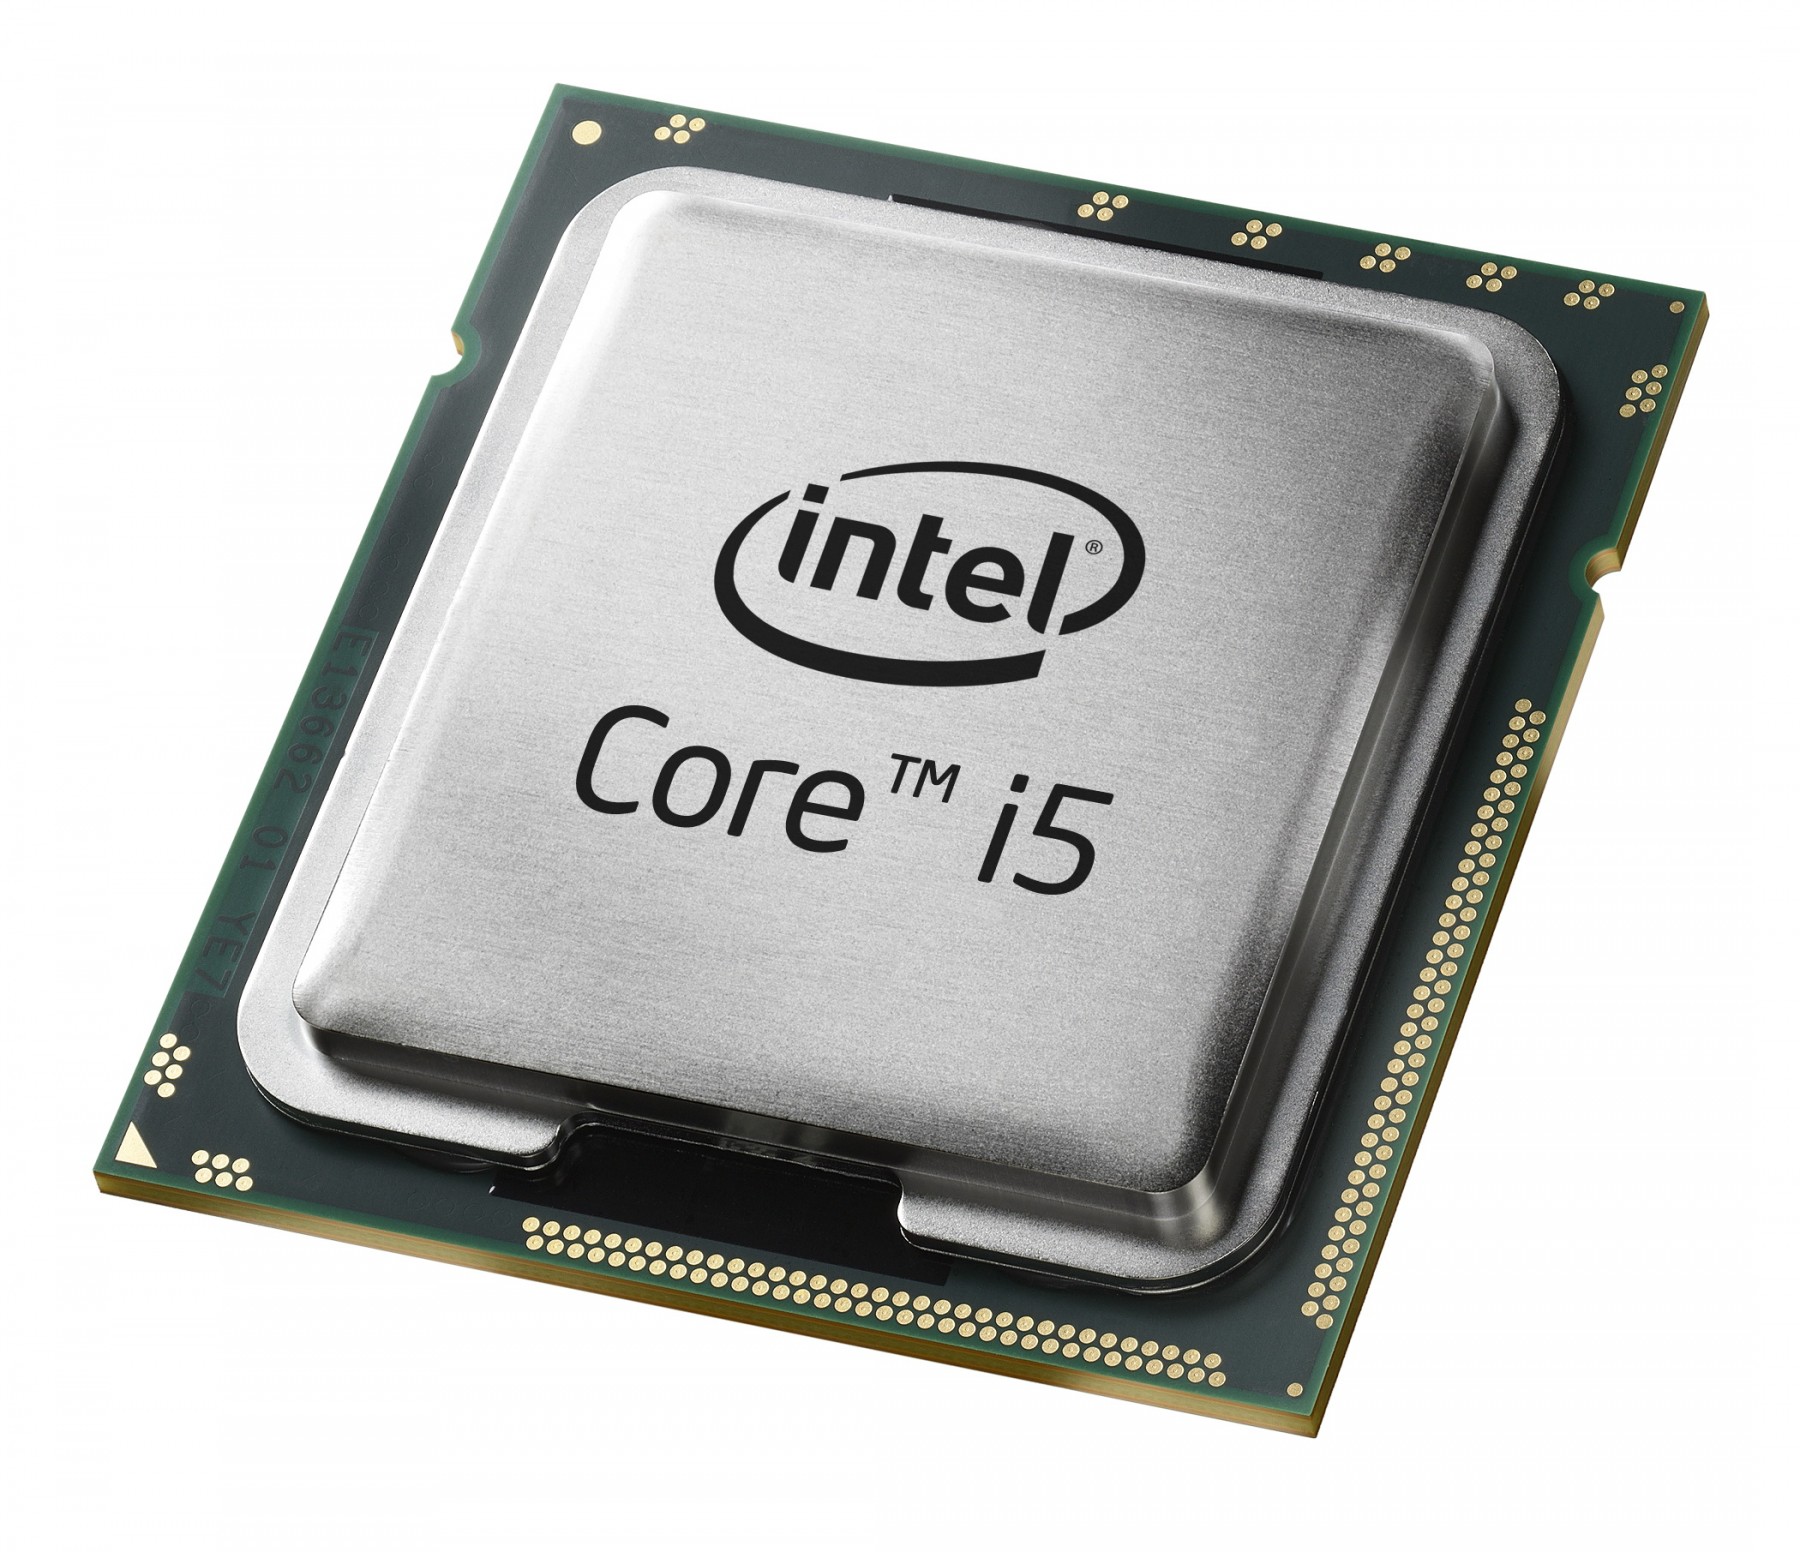 500030125-Intel Core i5-2415M SR071 2.3Ghz 3M BGA 1023 Processor-image